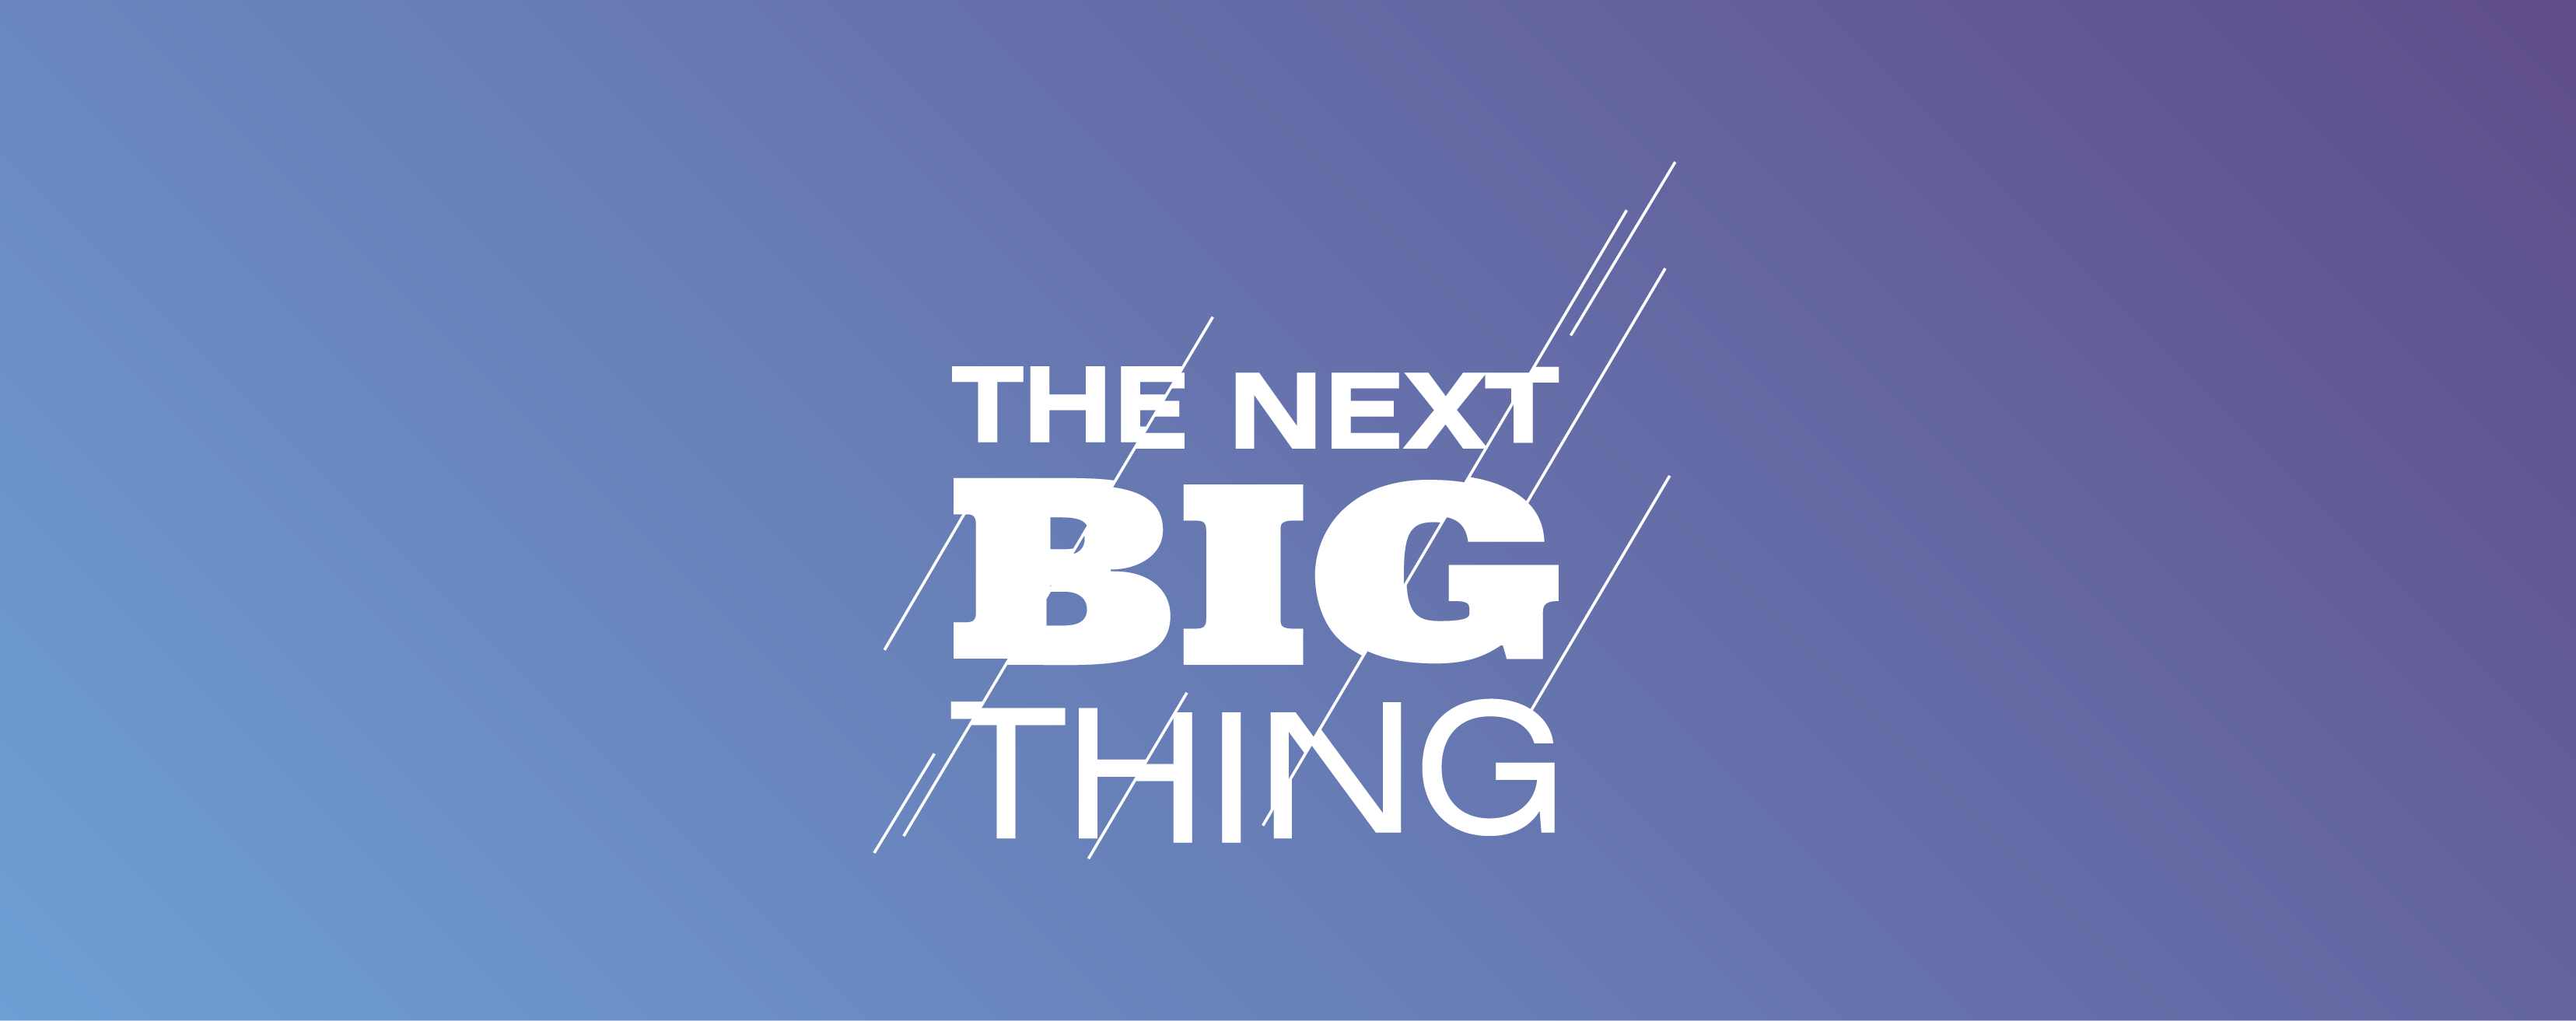 Почти 900 идей получено на питчинг The Next Big Thing. Generation